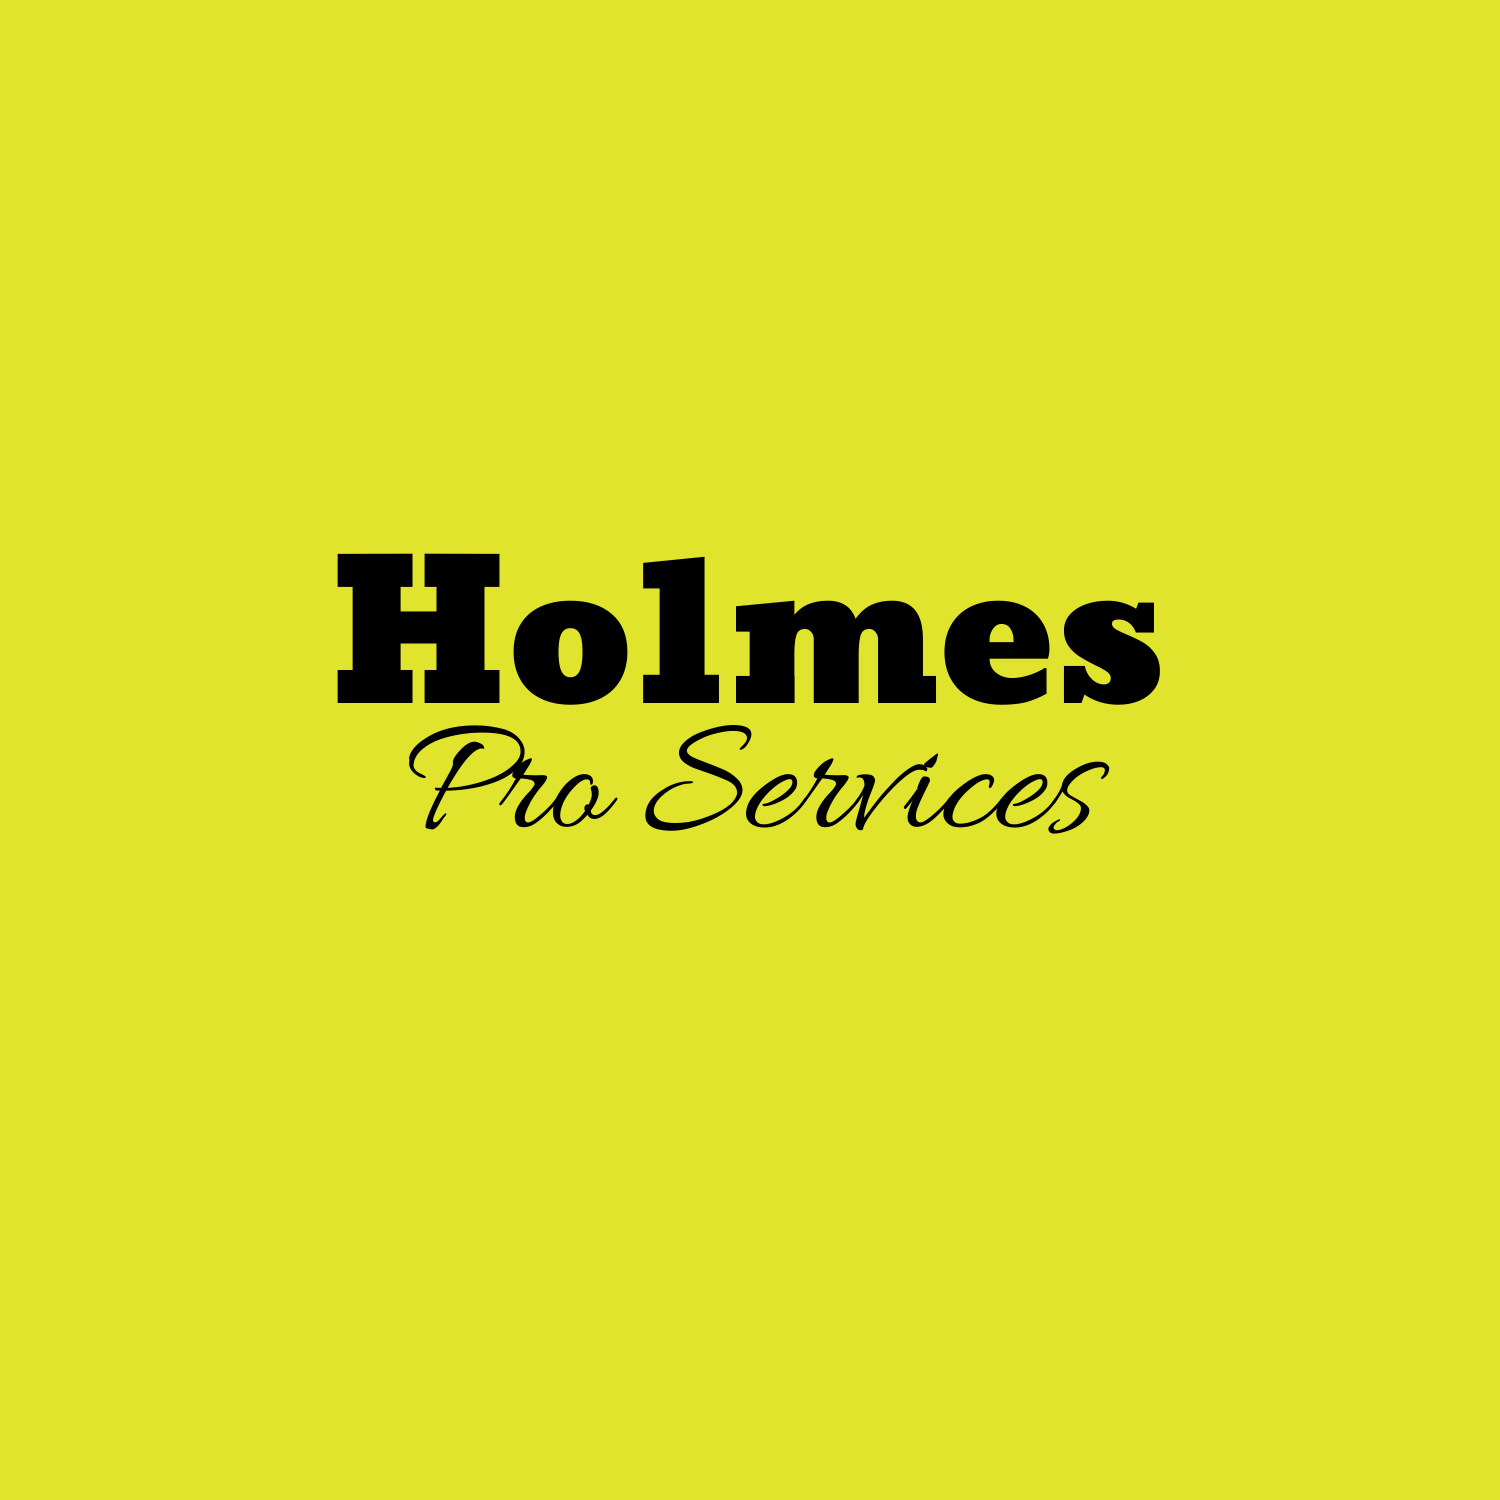 Holmes Pro Services Logo